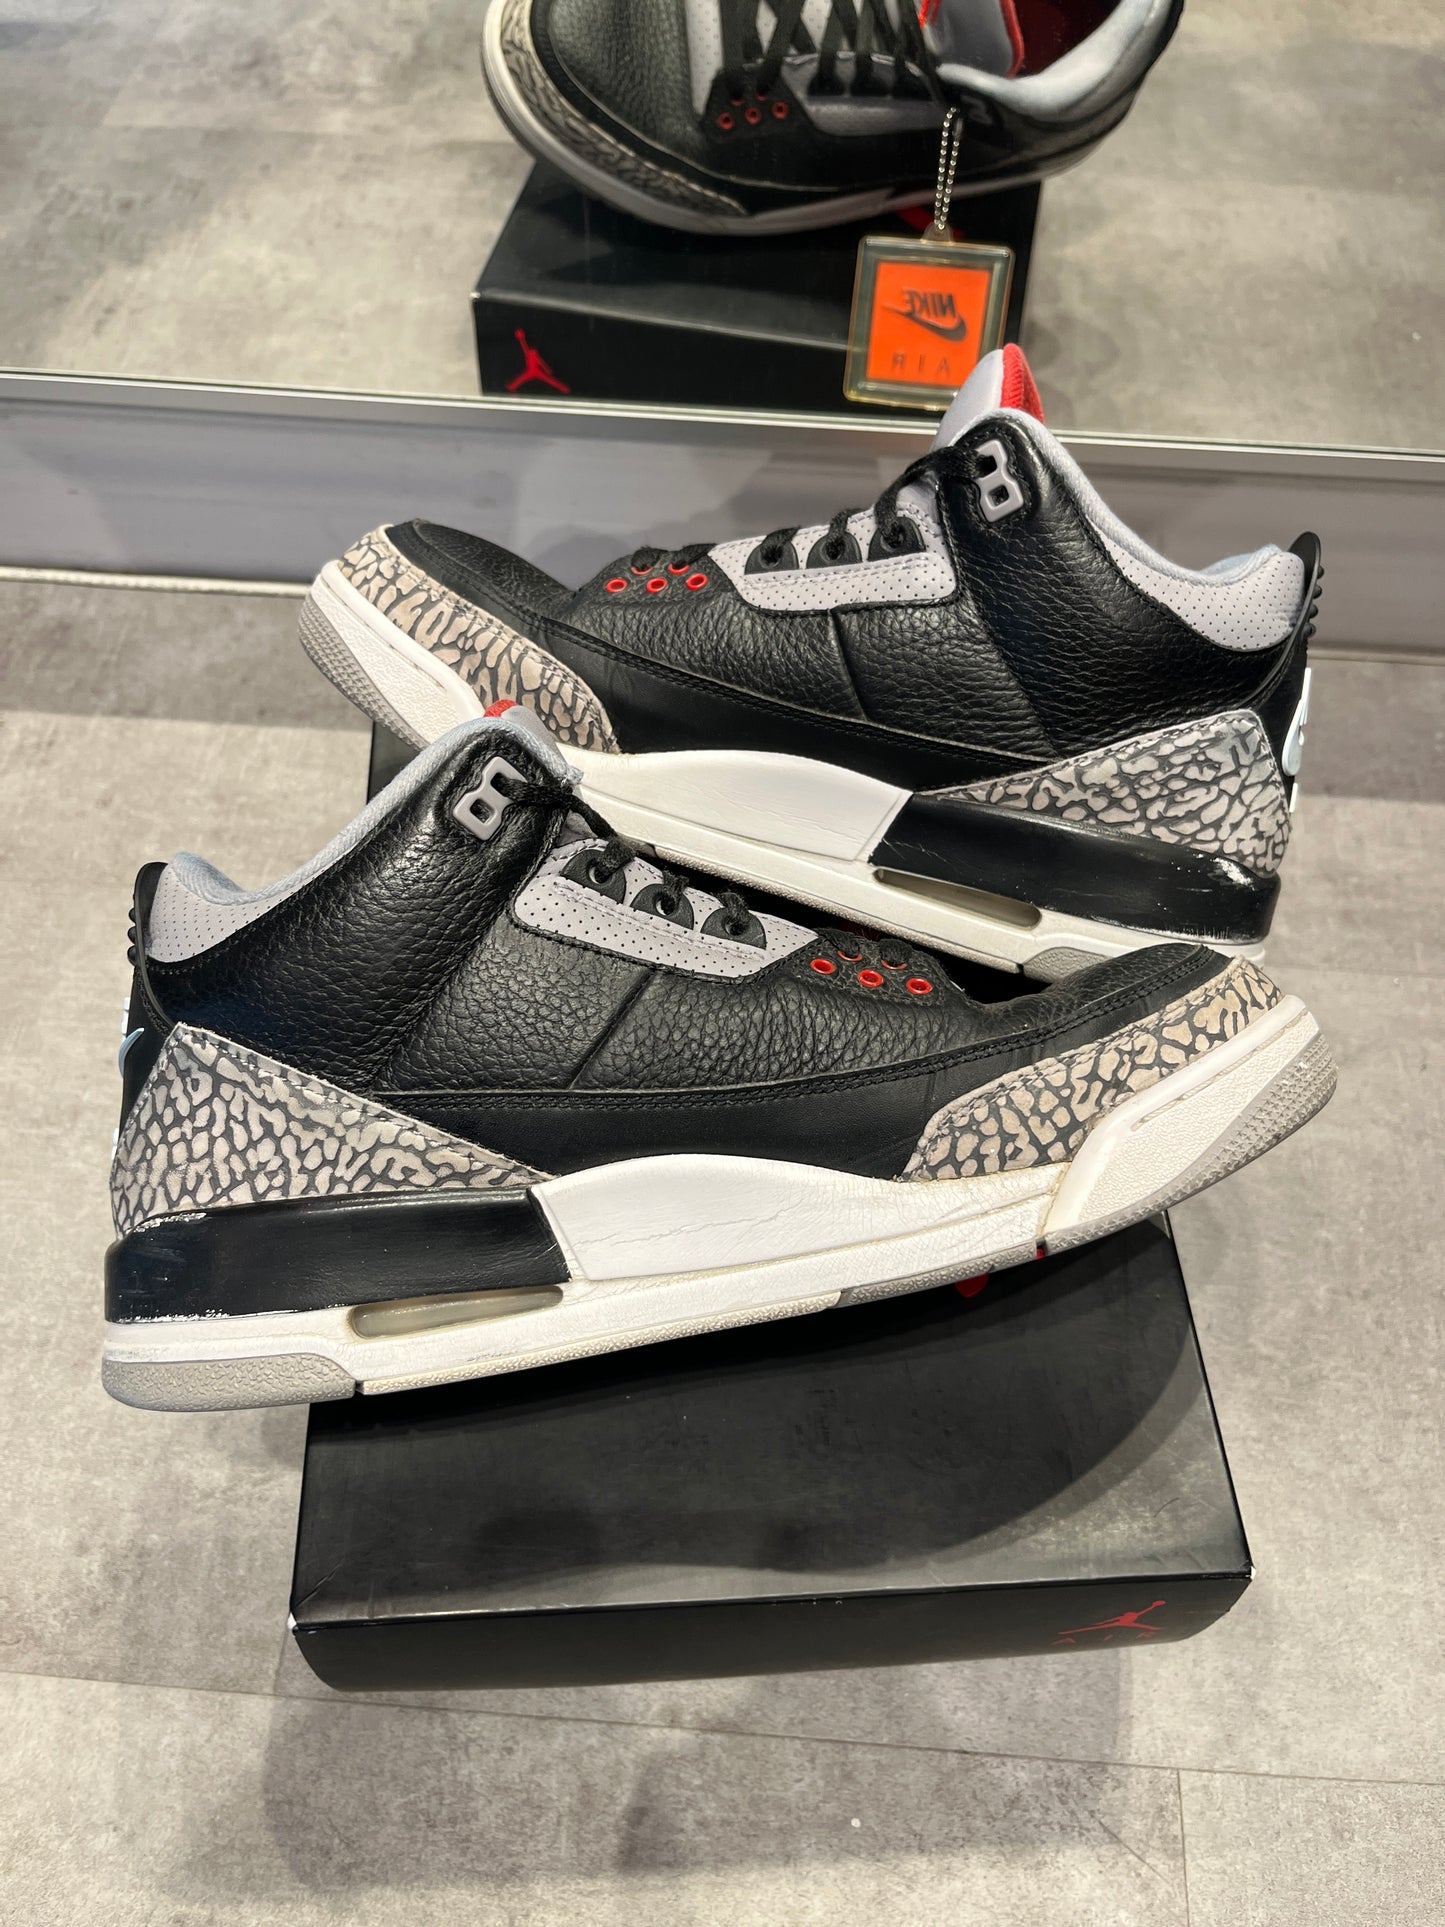 Jordan 3 Retro Black Cement (2018) (Preowned Size 10)